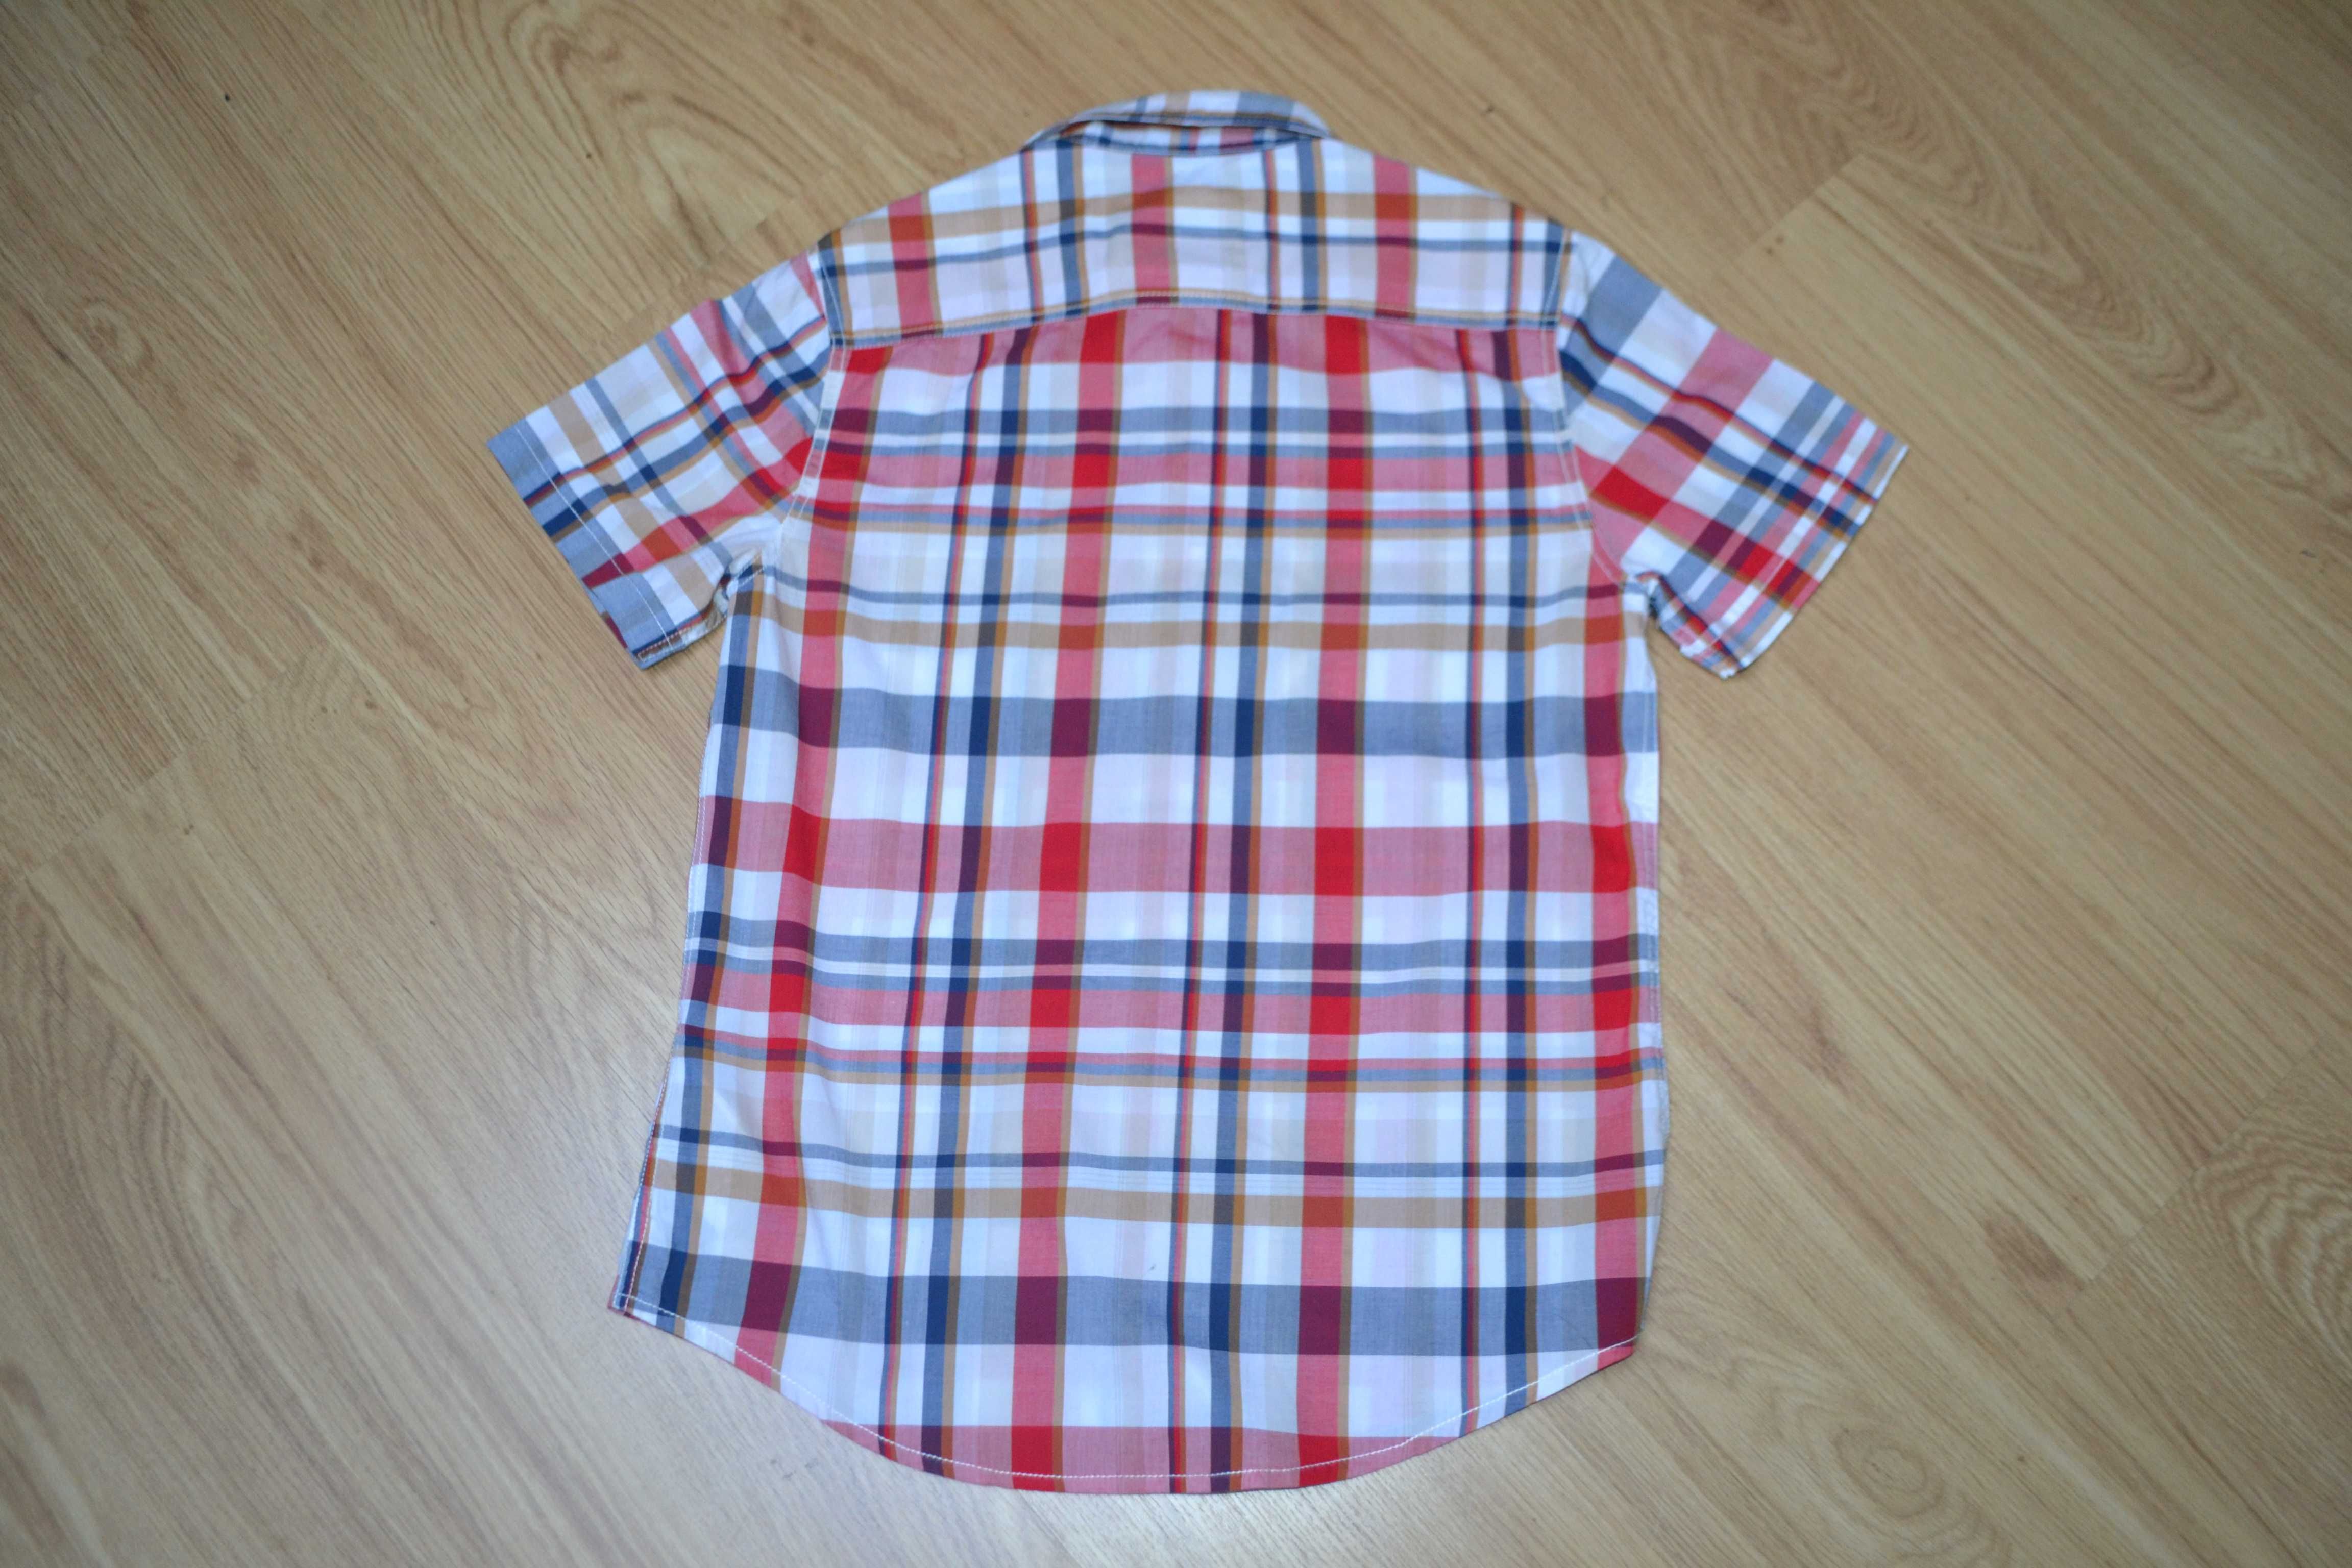 Excelente camisa manga curta, rapaz 14 anos (160 cm), Nukutavake Co.